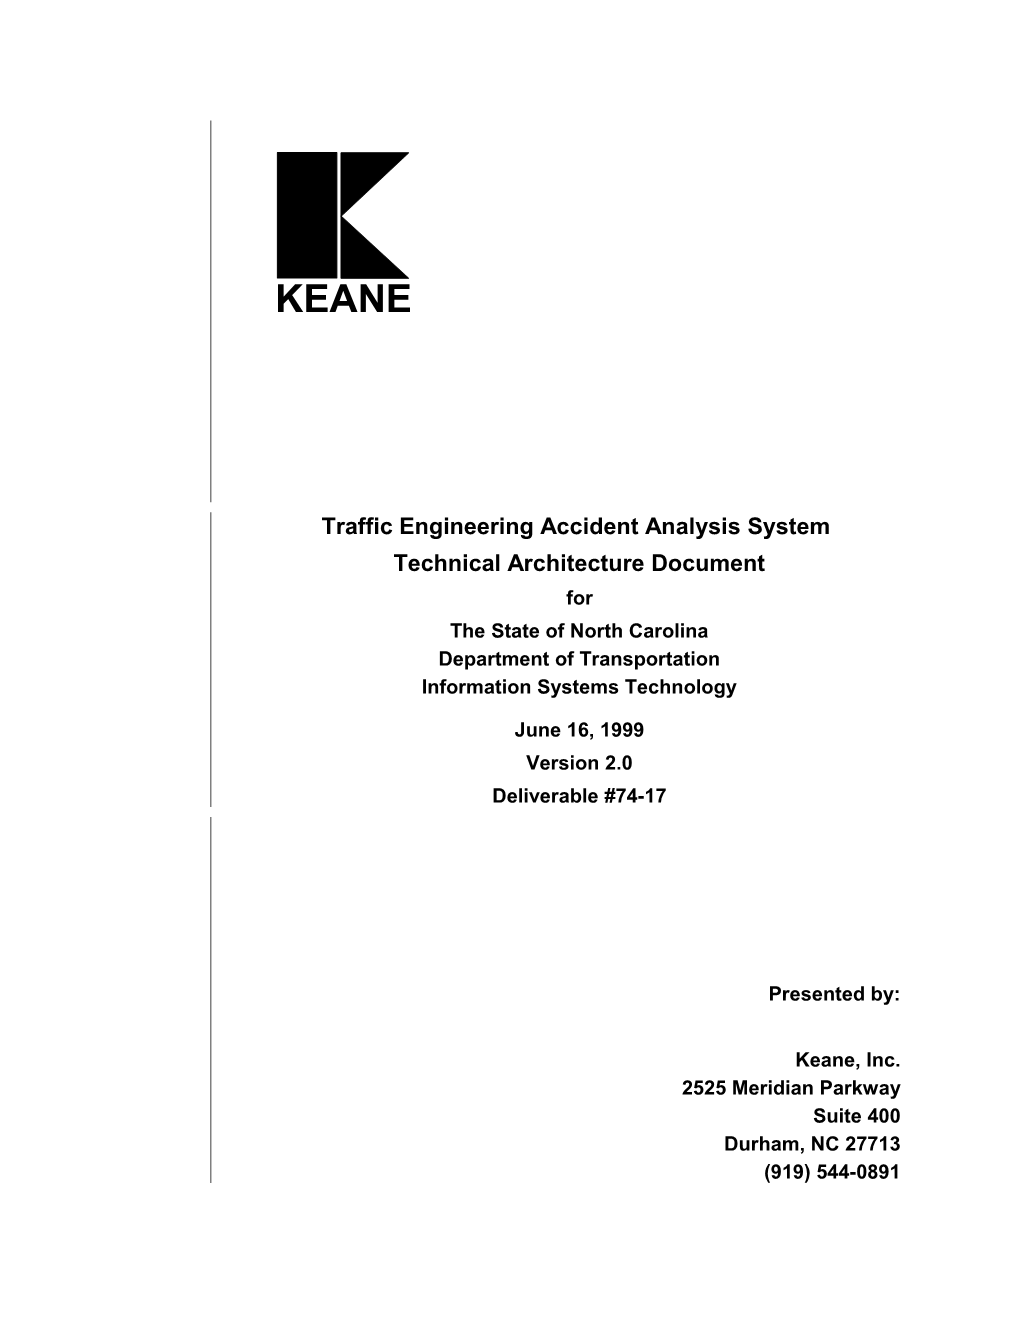 TEAAS Technical Architecture Document